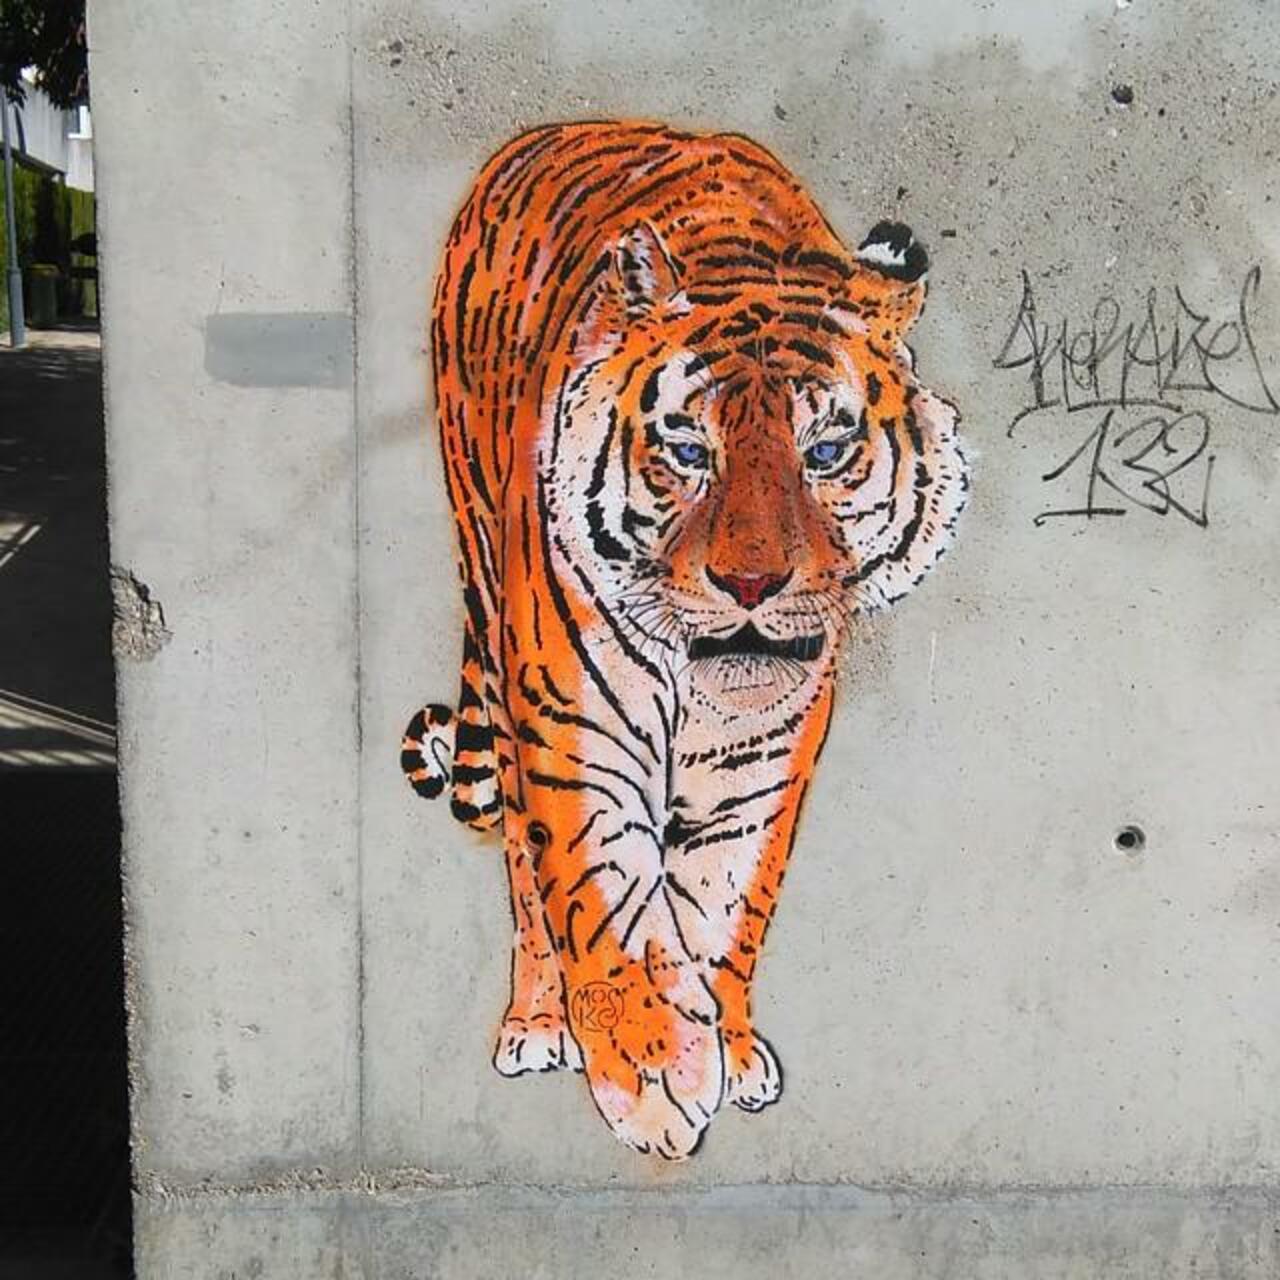 #Paris #graffiti photo by @streetarttourparis http://ift.tt/1jqzGxc #StreetArt http://t.co/a4EG2hlKO4